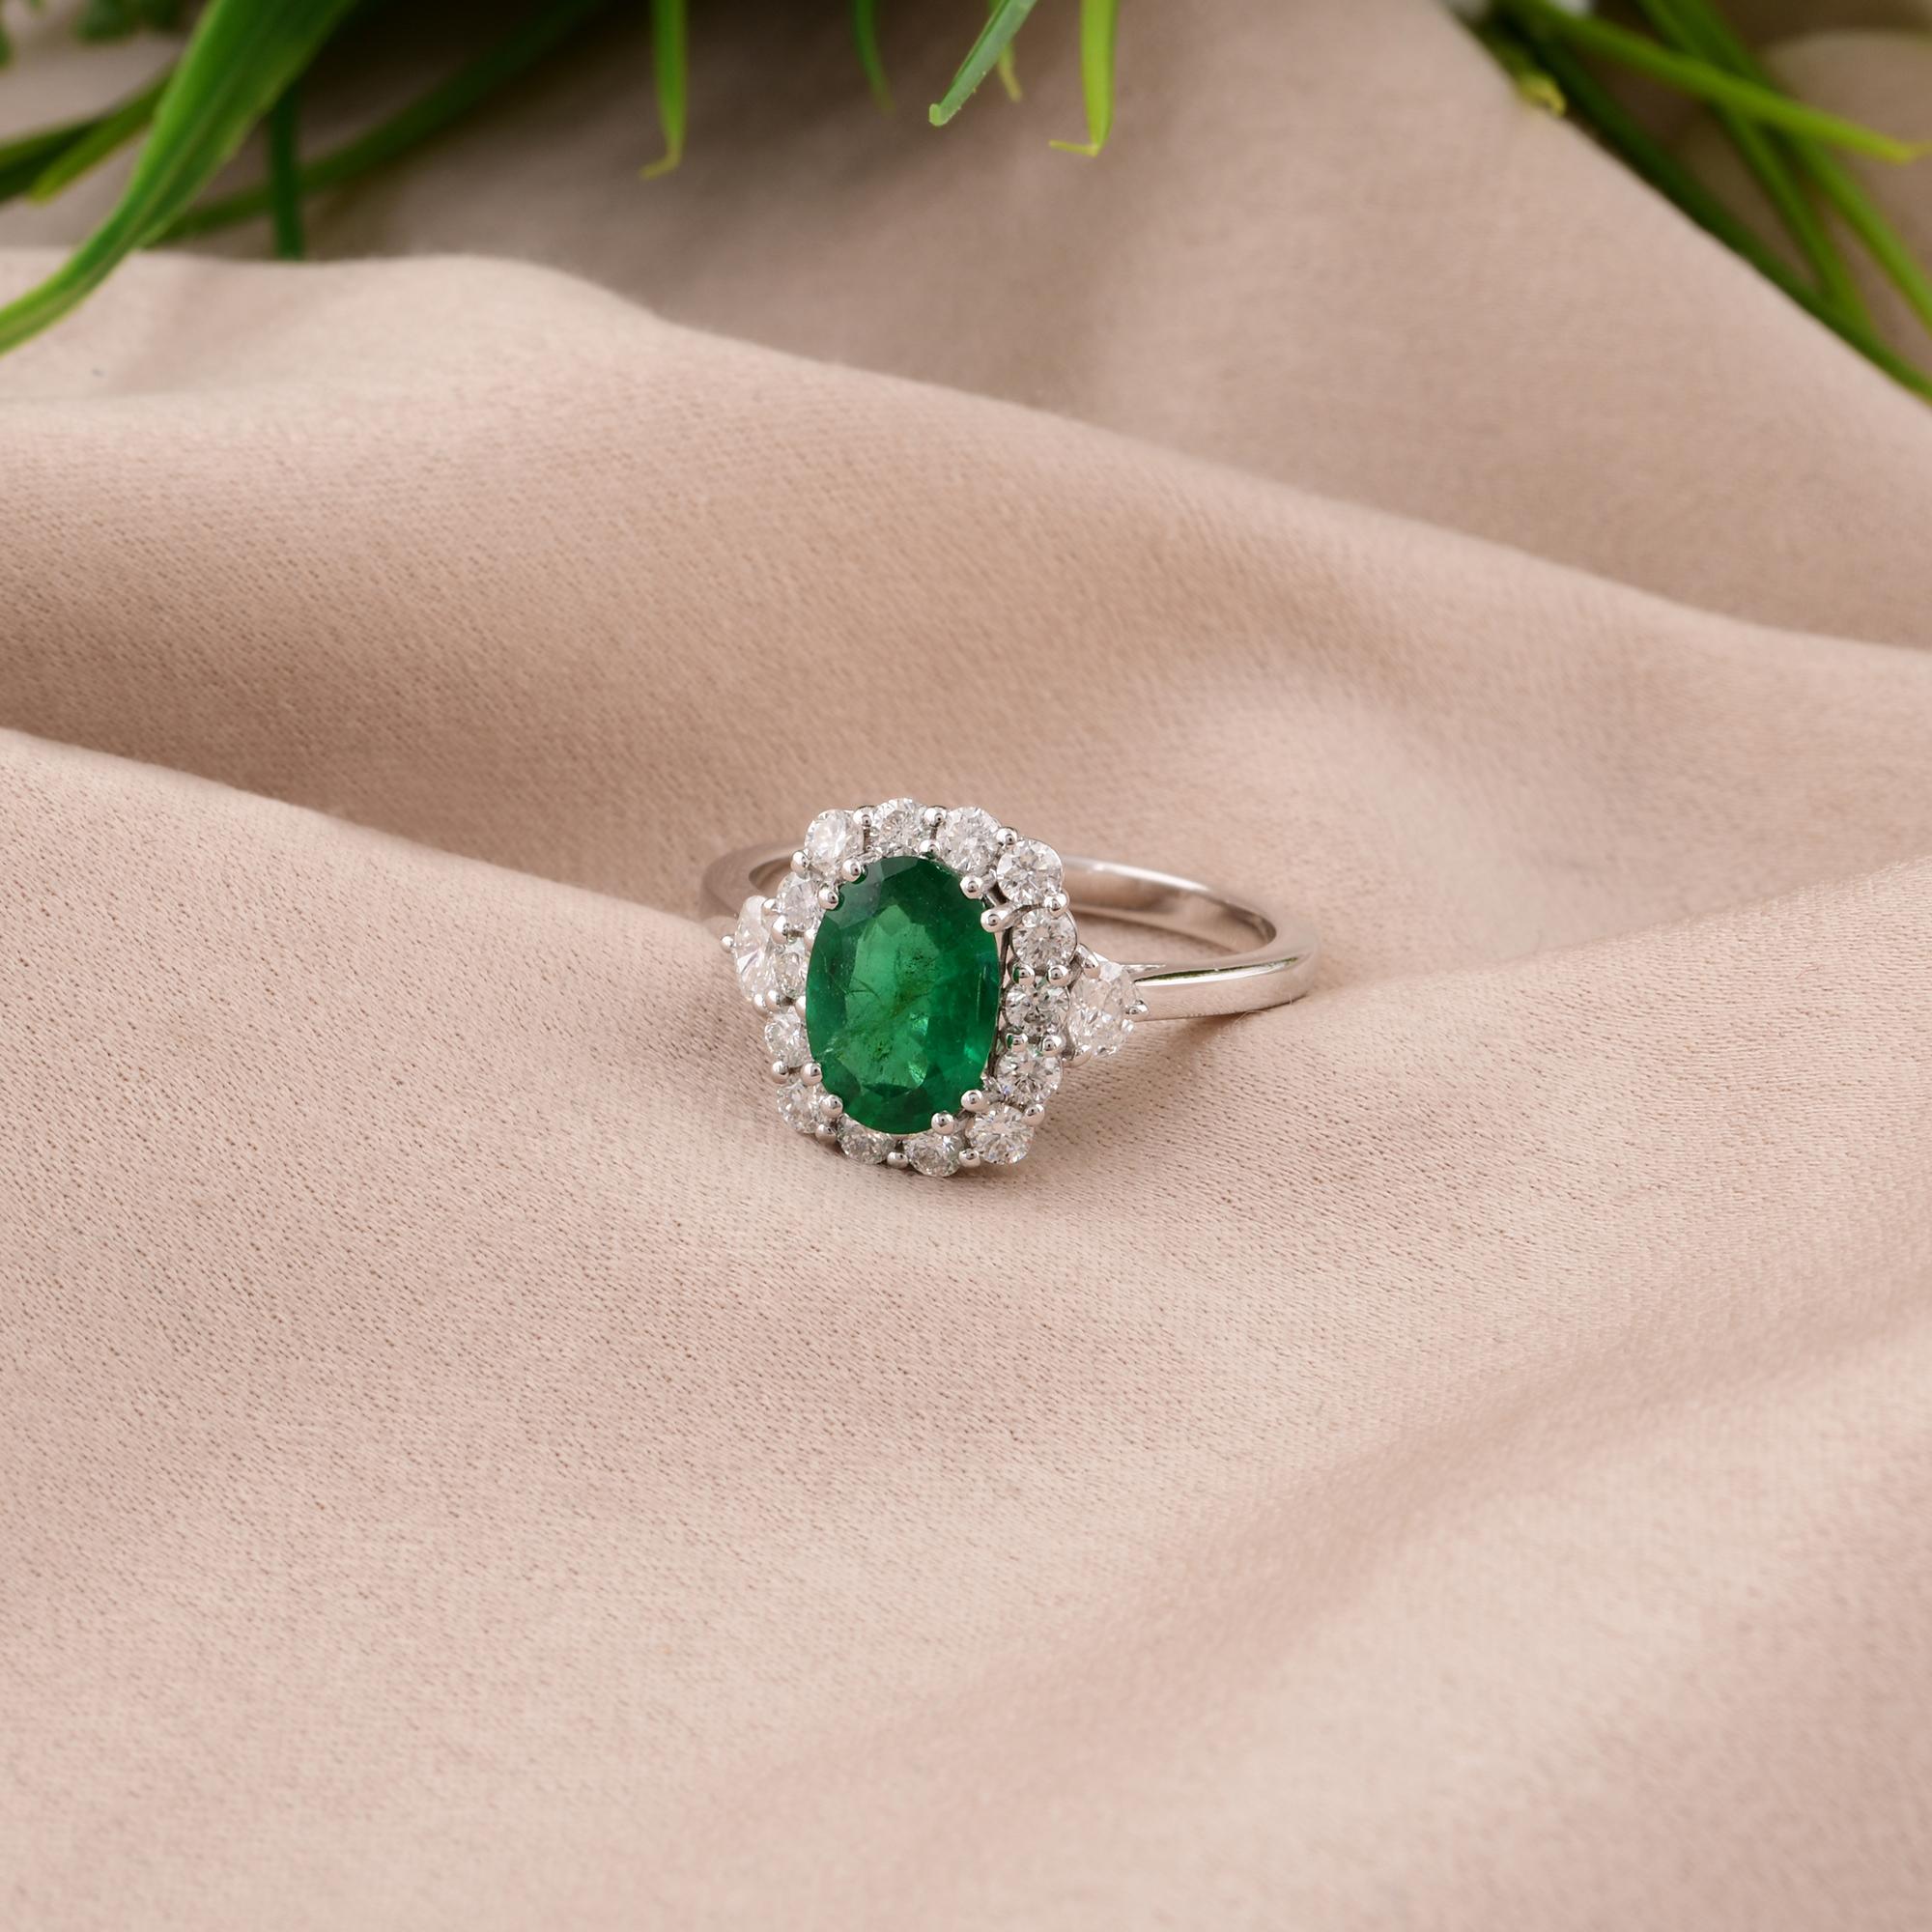 Oval Cut Oval Zambian Emerald Cocktail Ring Diamond 14 Karat White Gold Handmade Jewelry For Sale